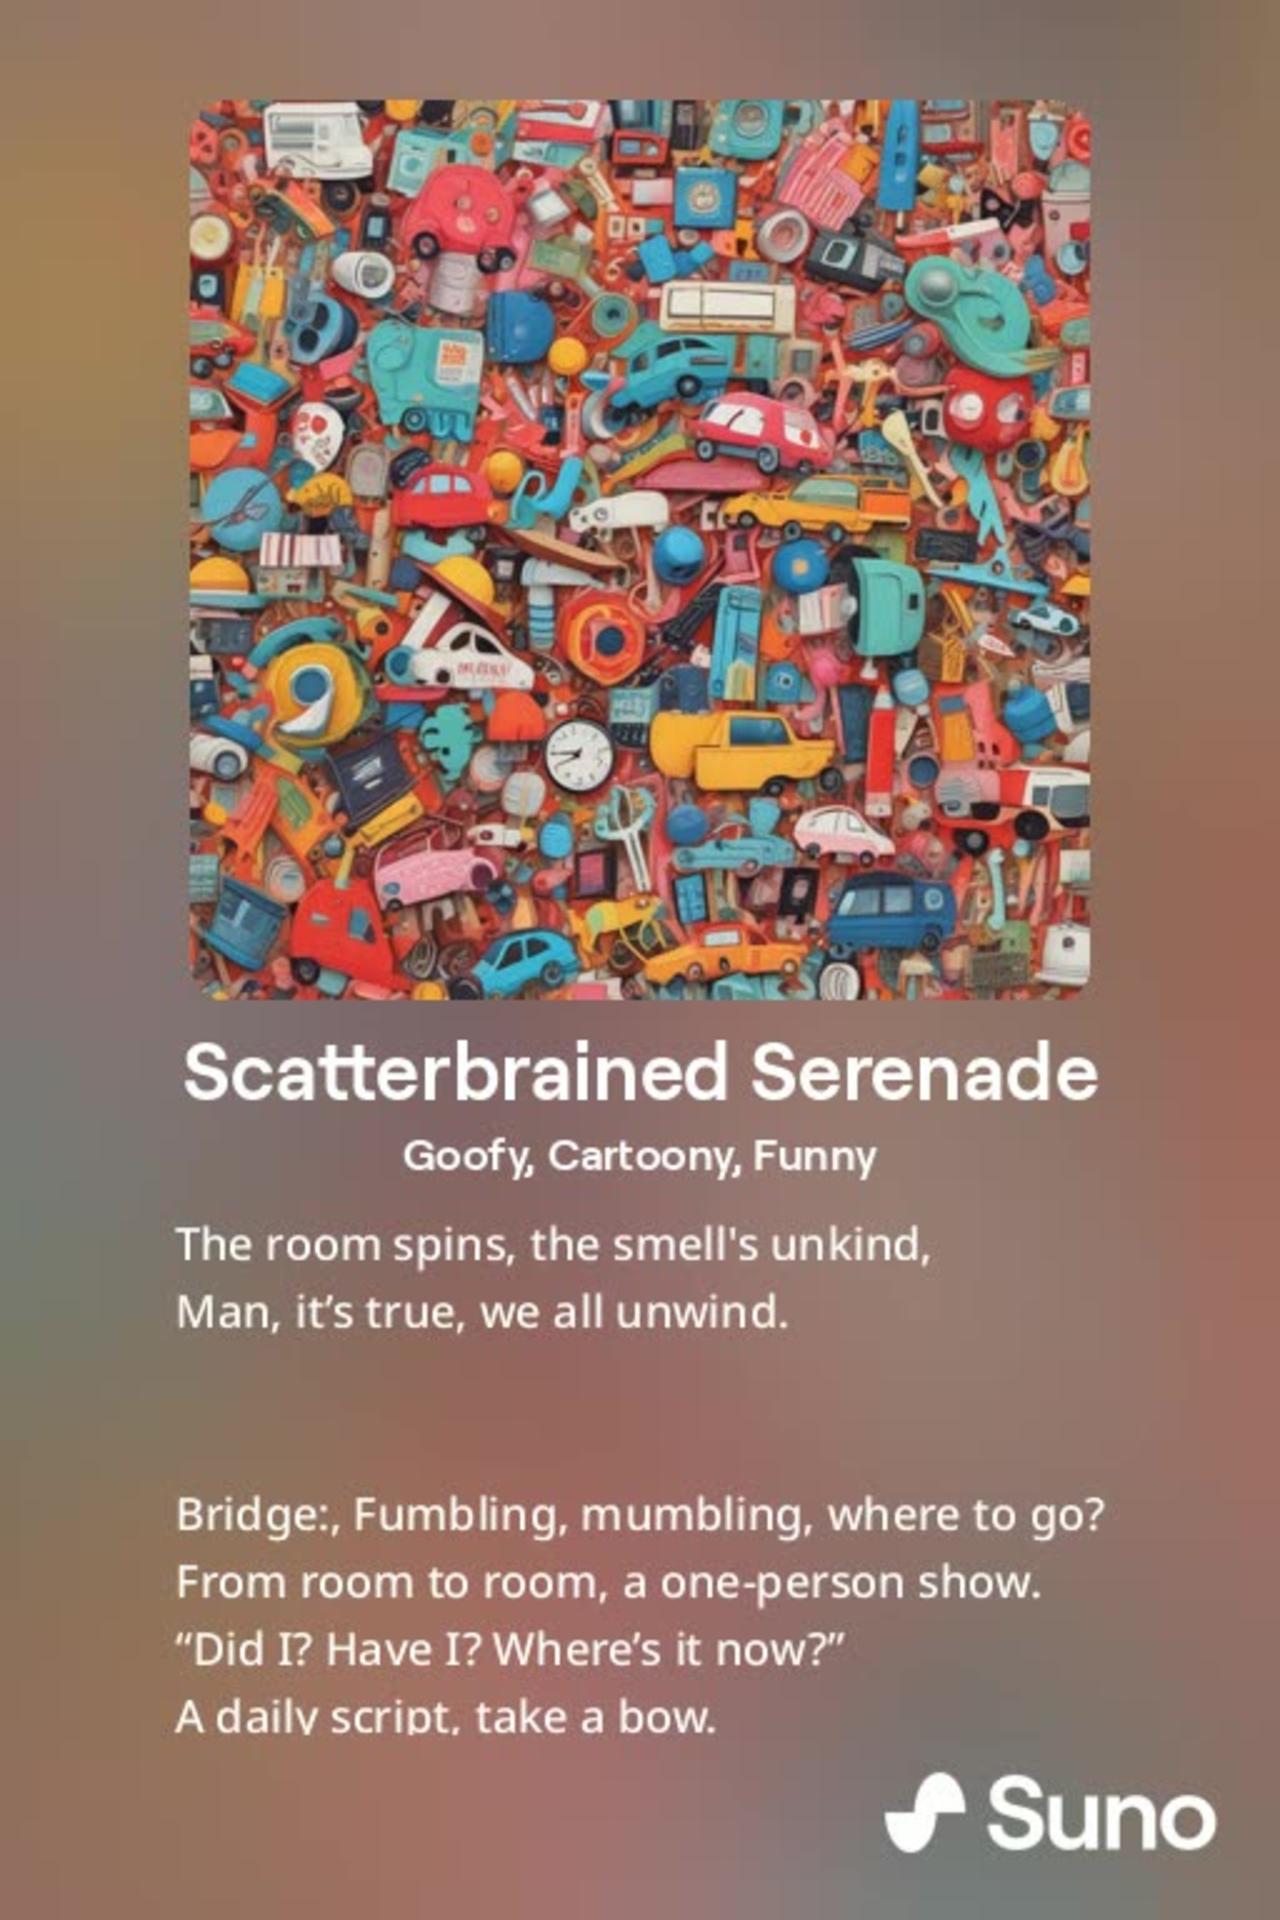 Scatteredbrained Serenade